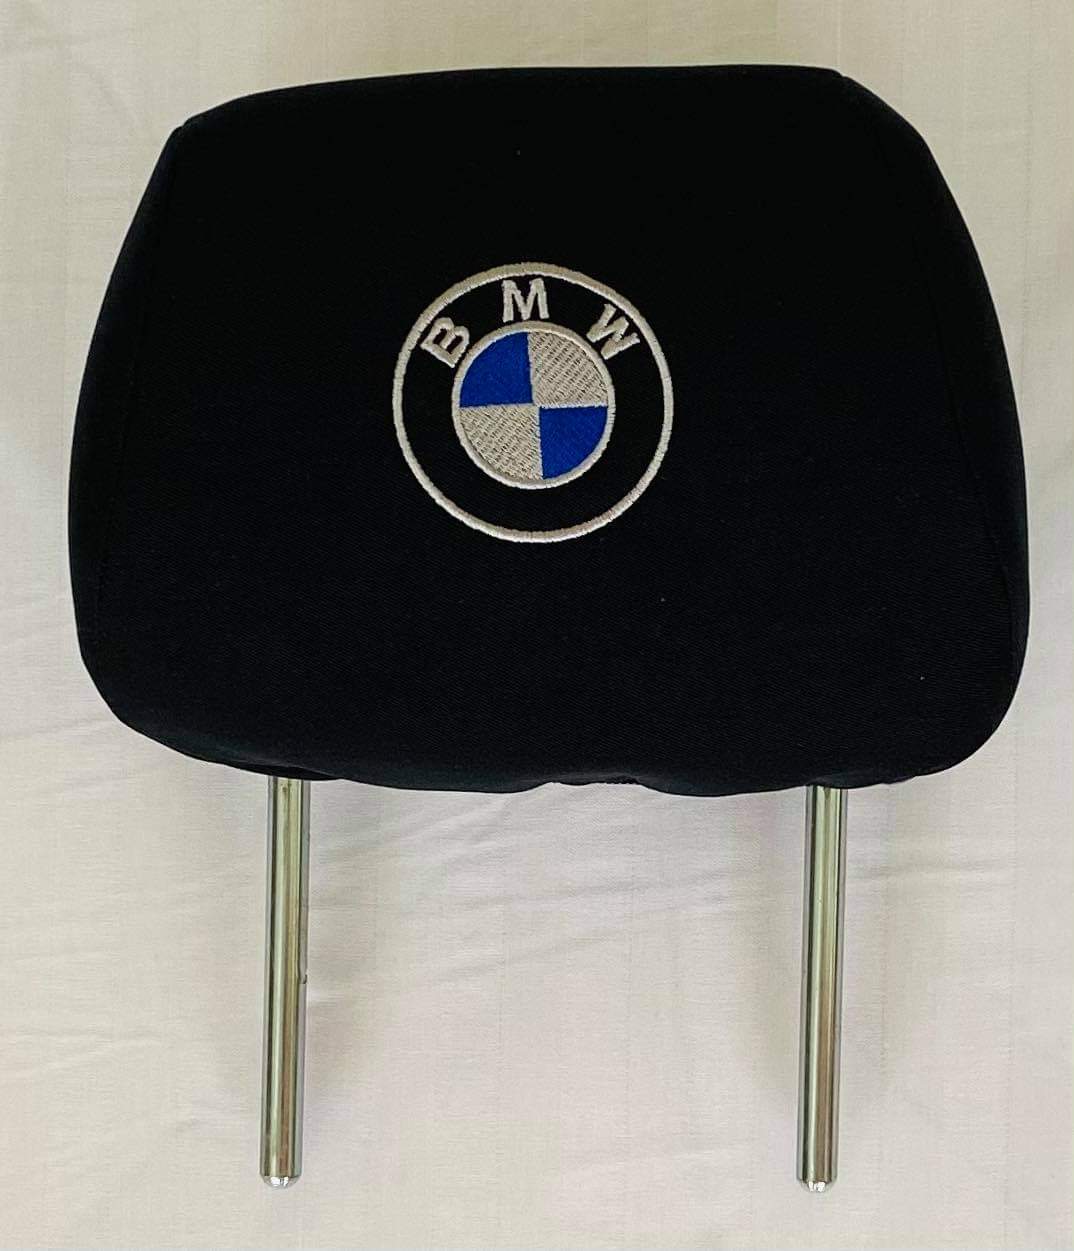 Čierne návleky na opierky hlavy s logom BMW